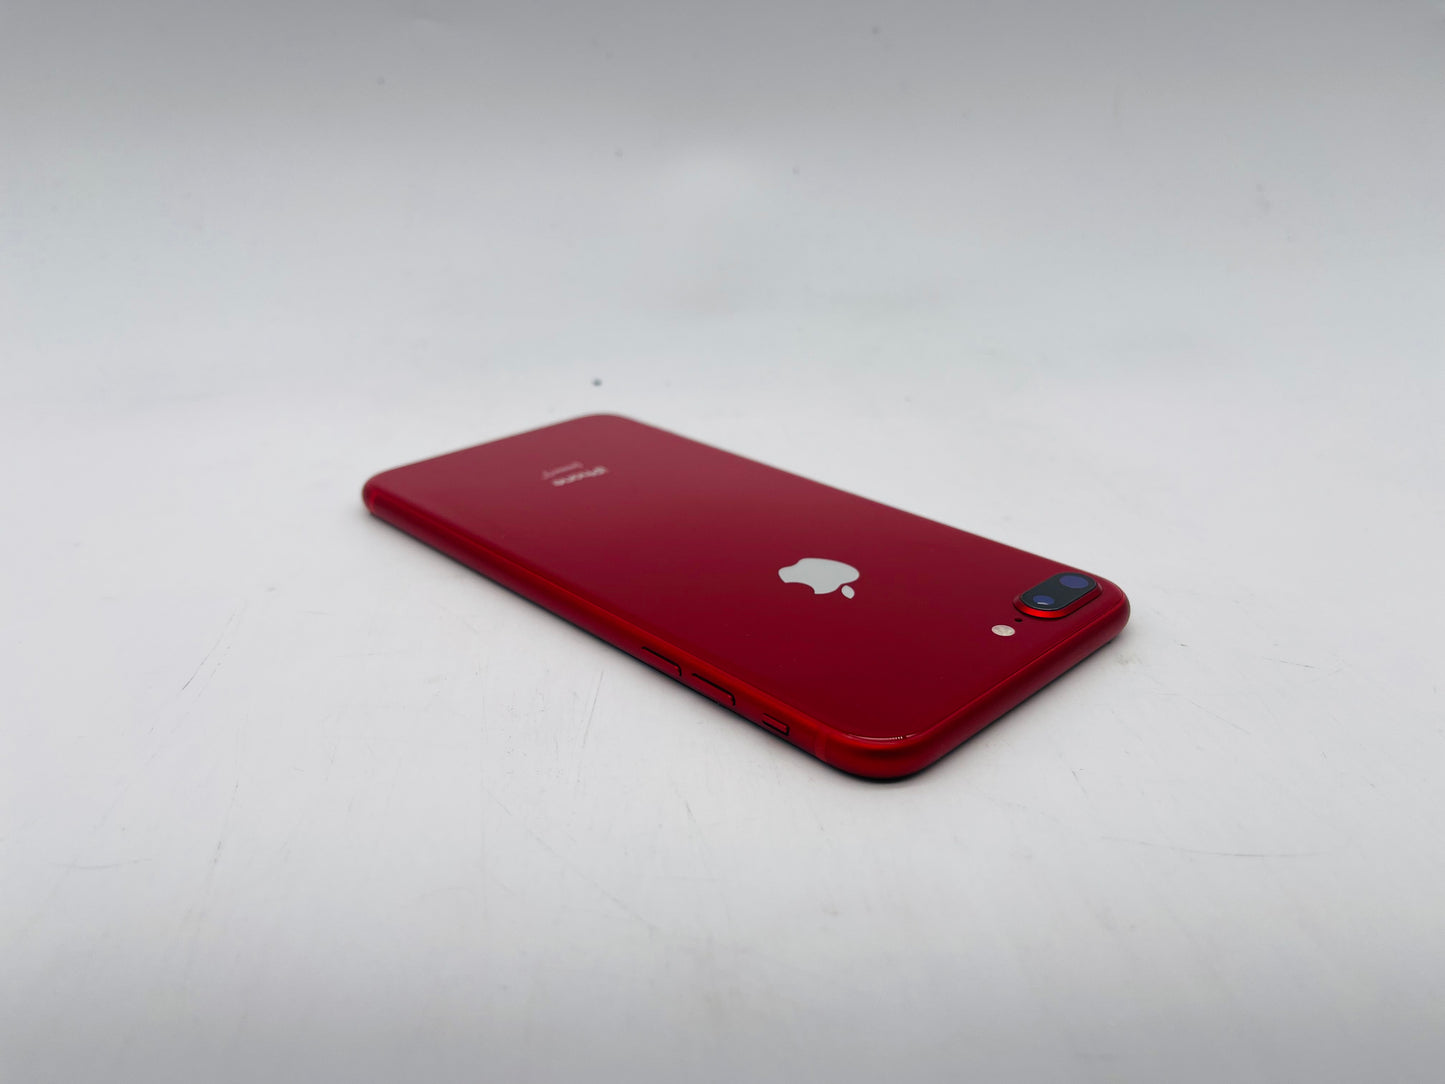 Apple iPhone 8 Plus GSM/CDMA Unlocked A1864 256GB "Red" - Very Good